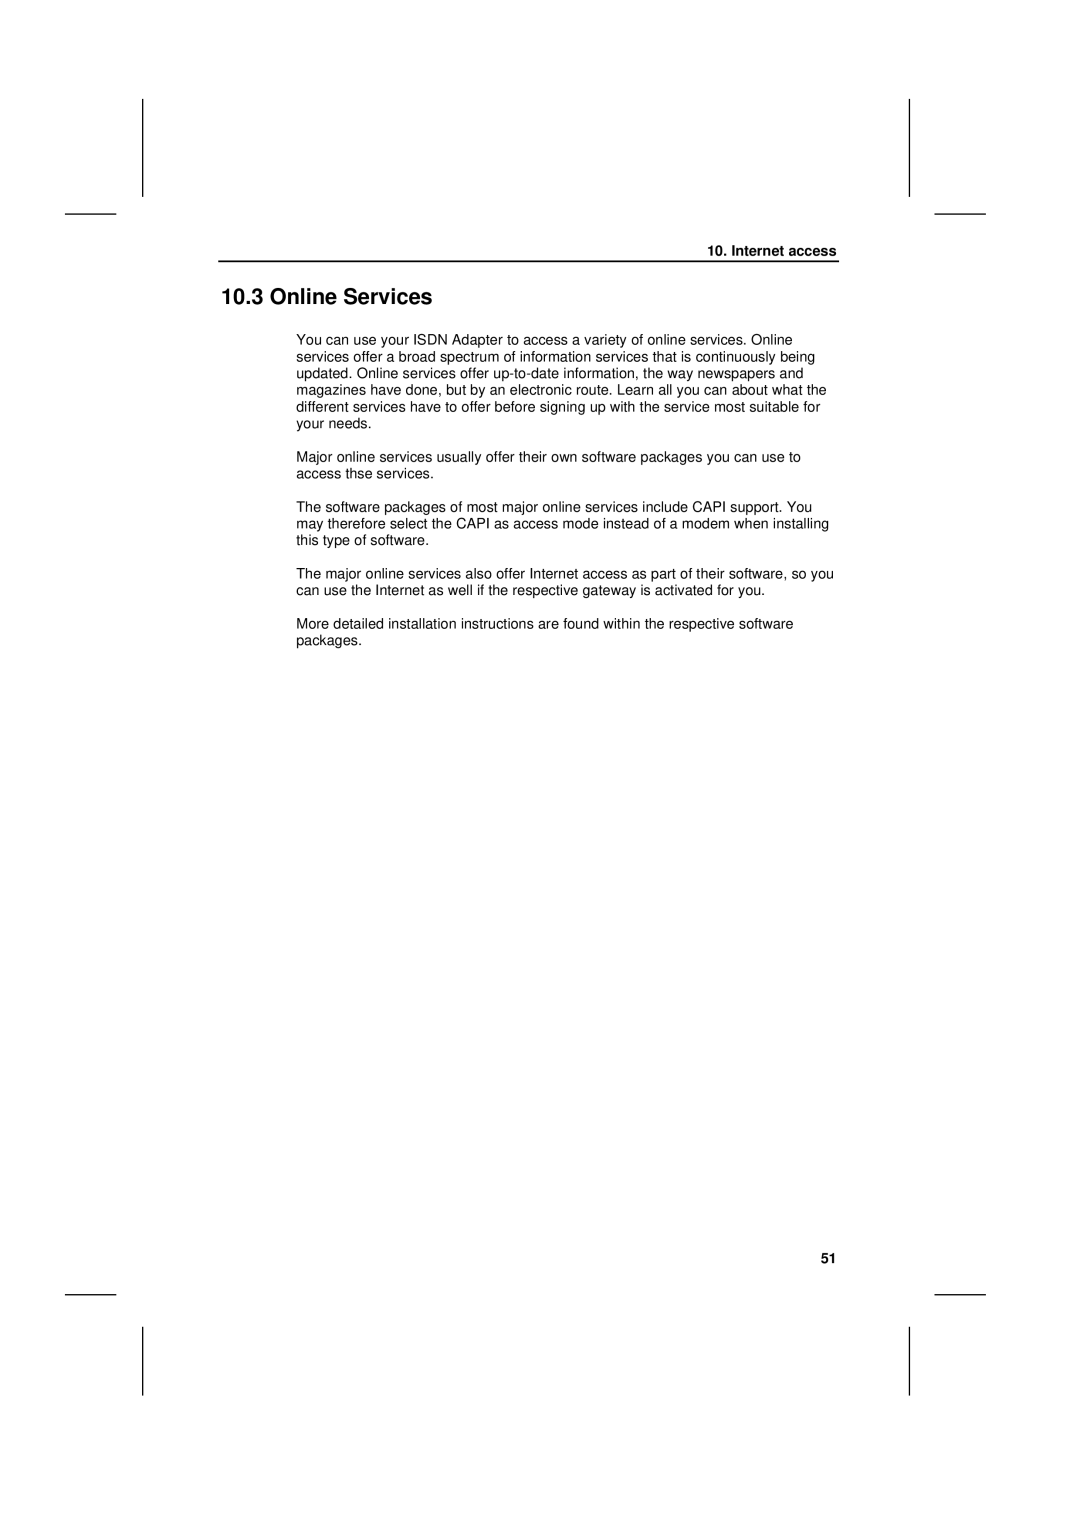 Siemens I-SURF manual Online Services 